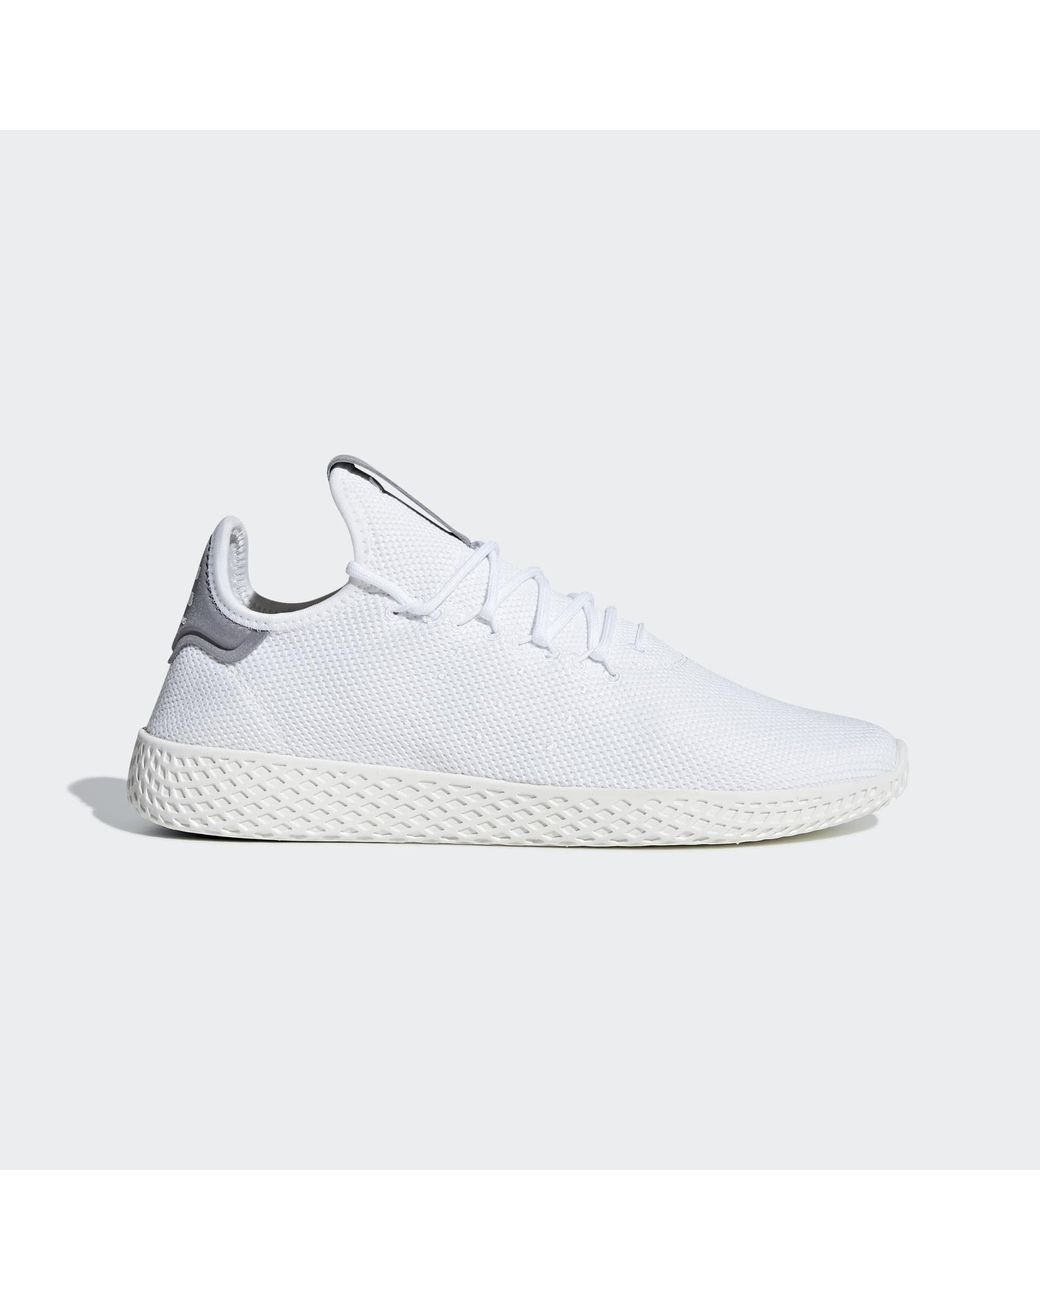 adidas Pharrell Williams Tennis Hu Shoes in White | Lyst UK